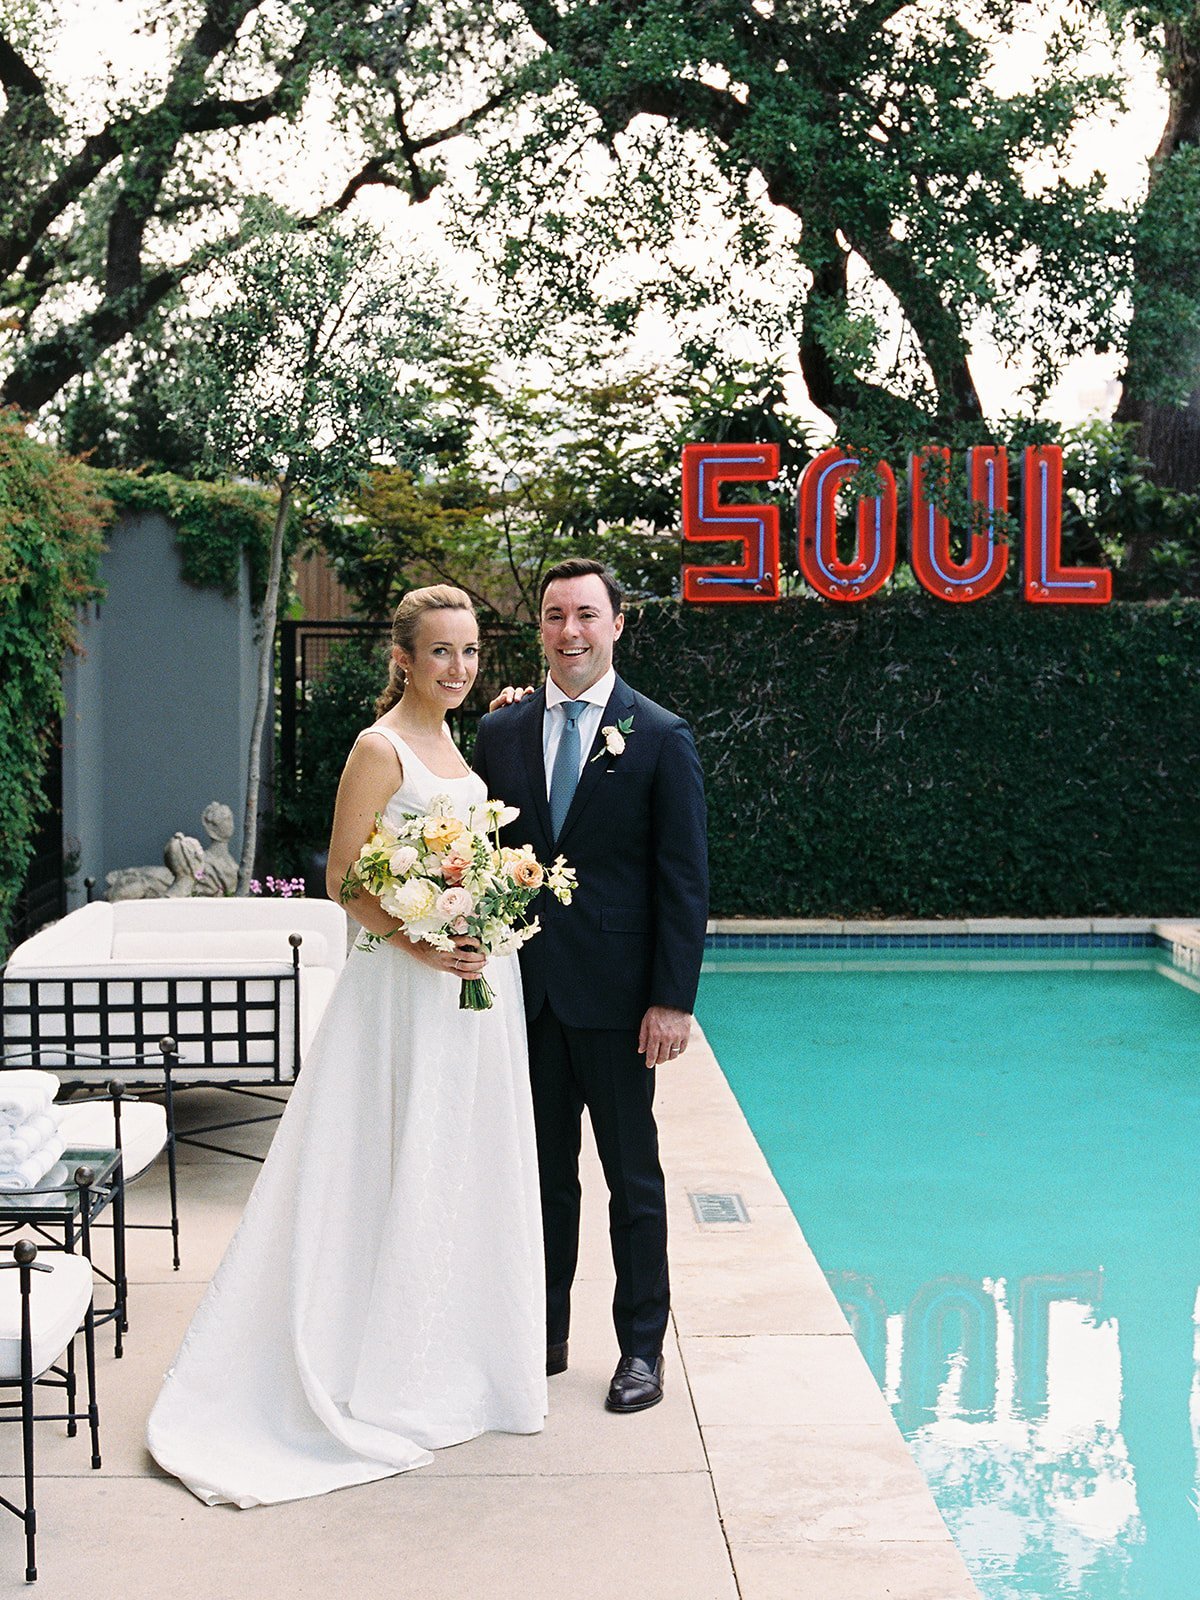 Best-Austin-Wedding-Photographers-Elopement-Film-35mm-Asheville-Santa-Barbara-Hotel-Saint-Cecilia-96.jpg